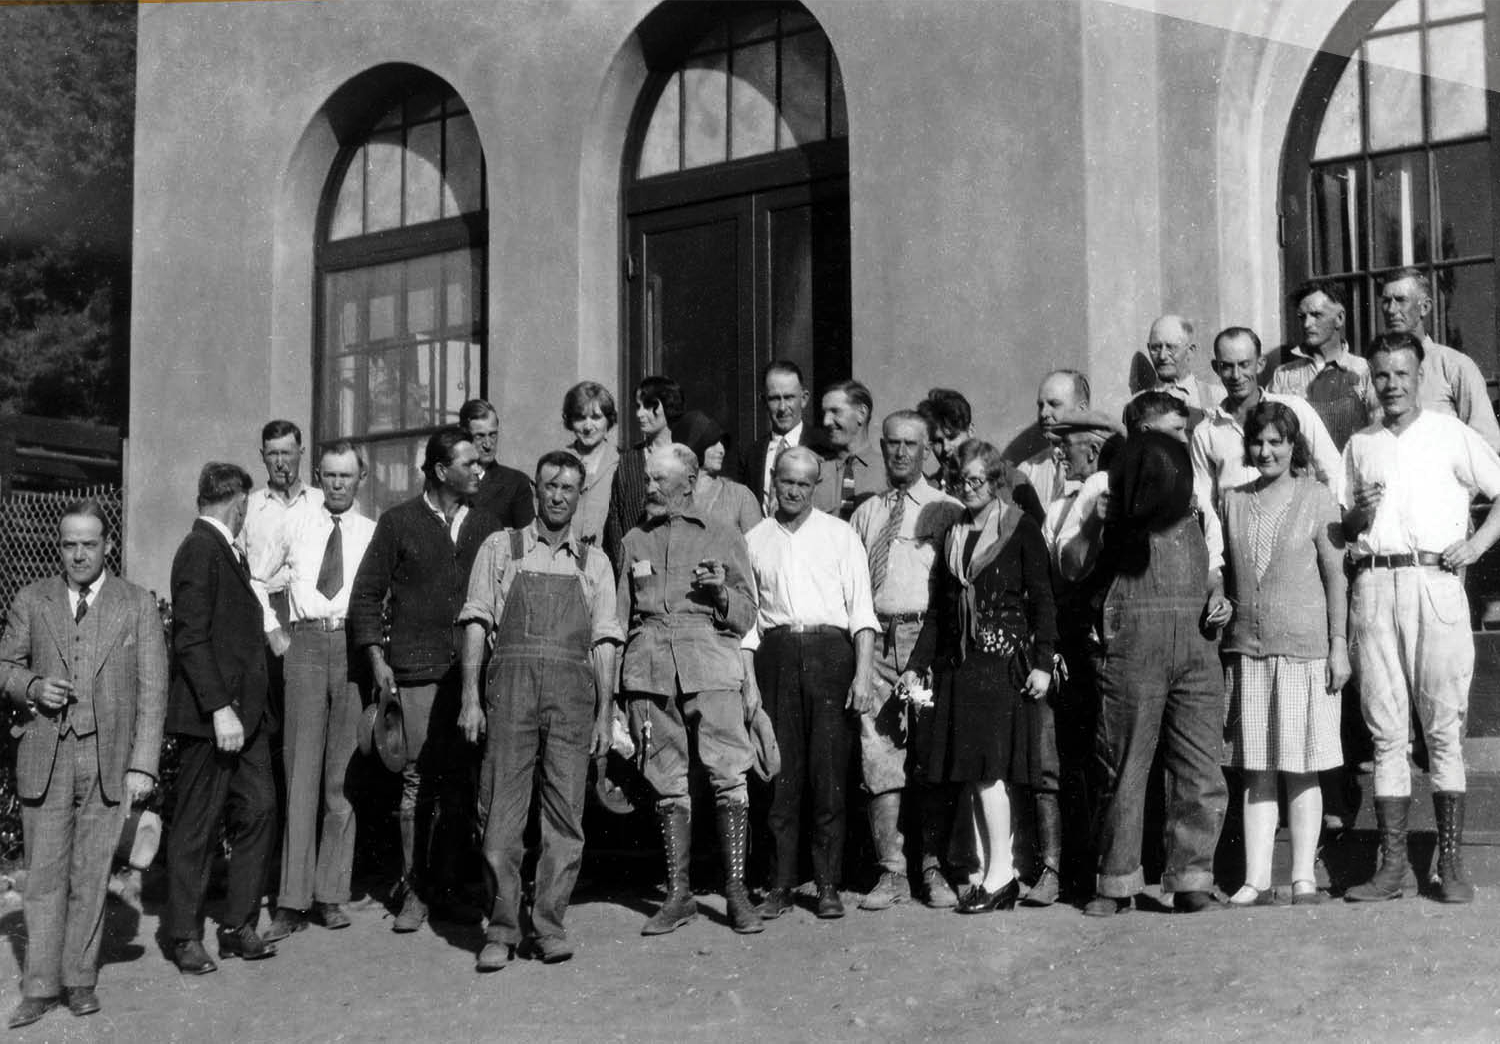 Zoo employees in 1927